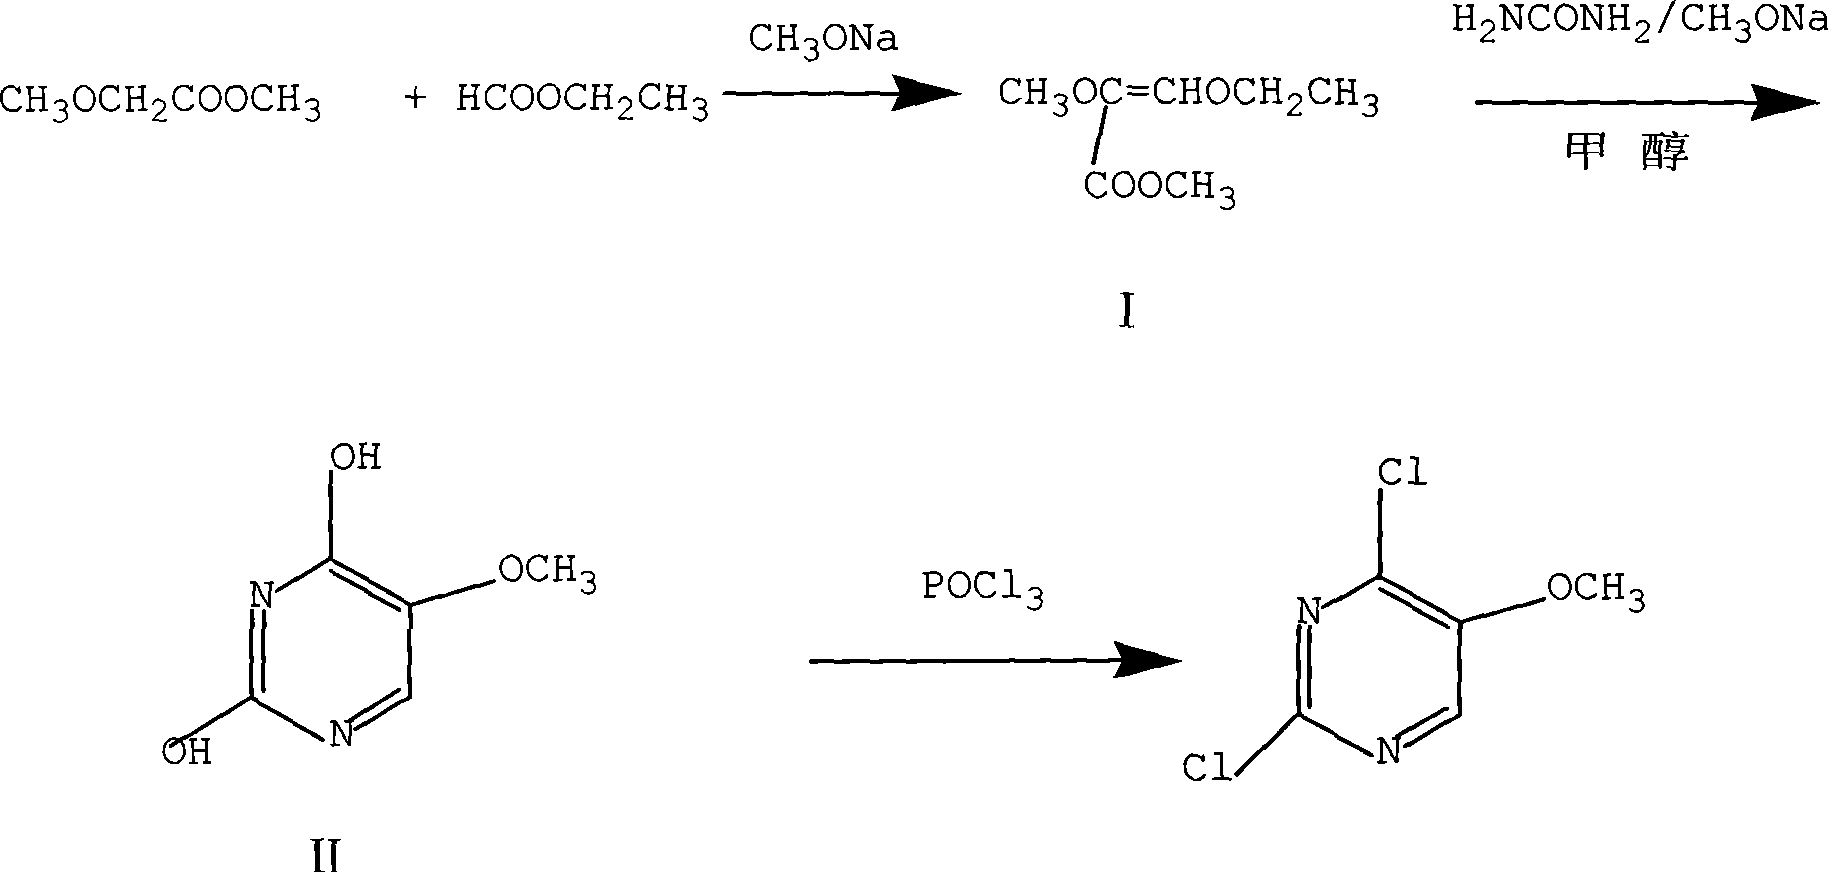 Preparation of 2,4-dichloro-5-methoxy pyrimidine